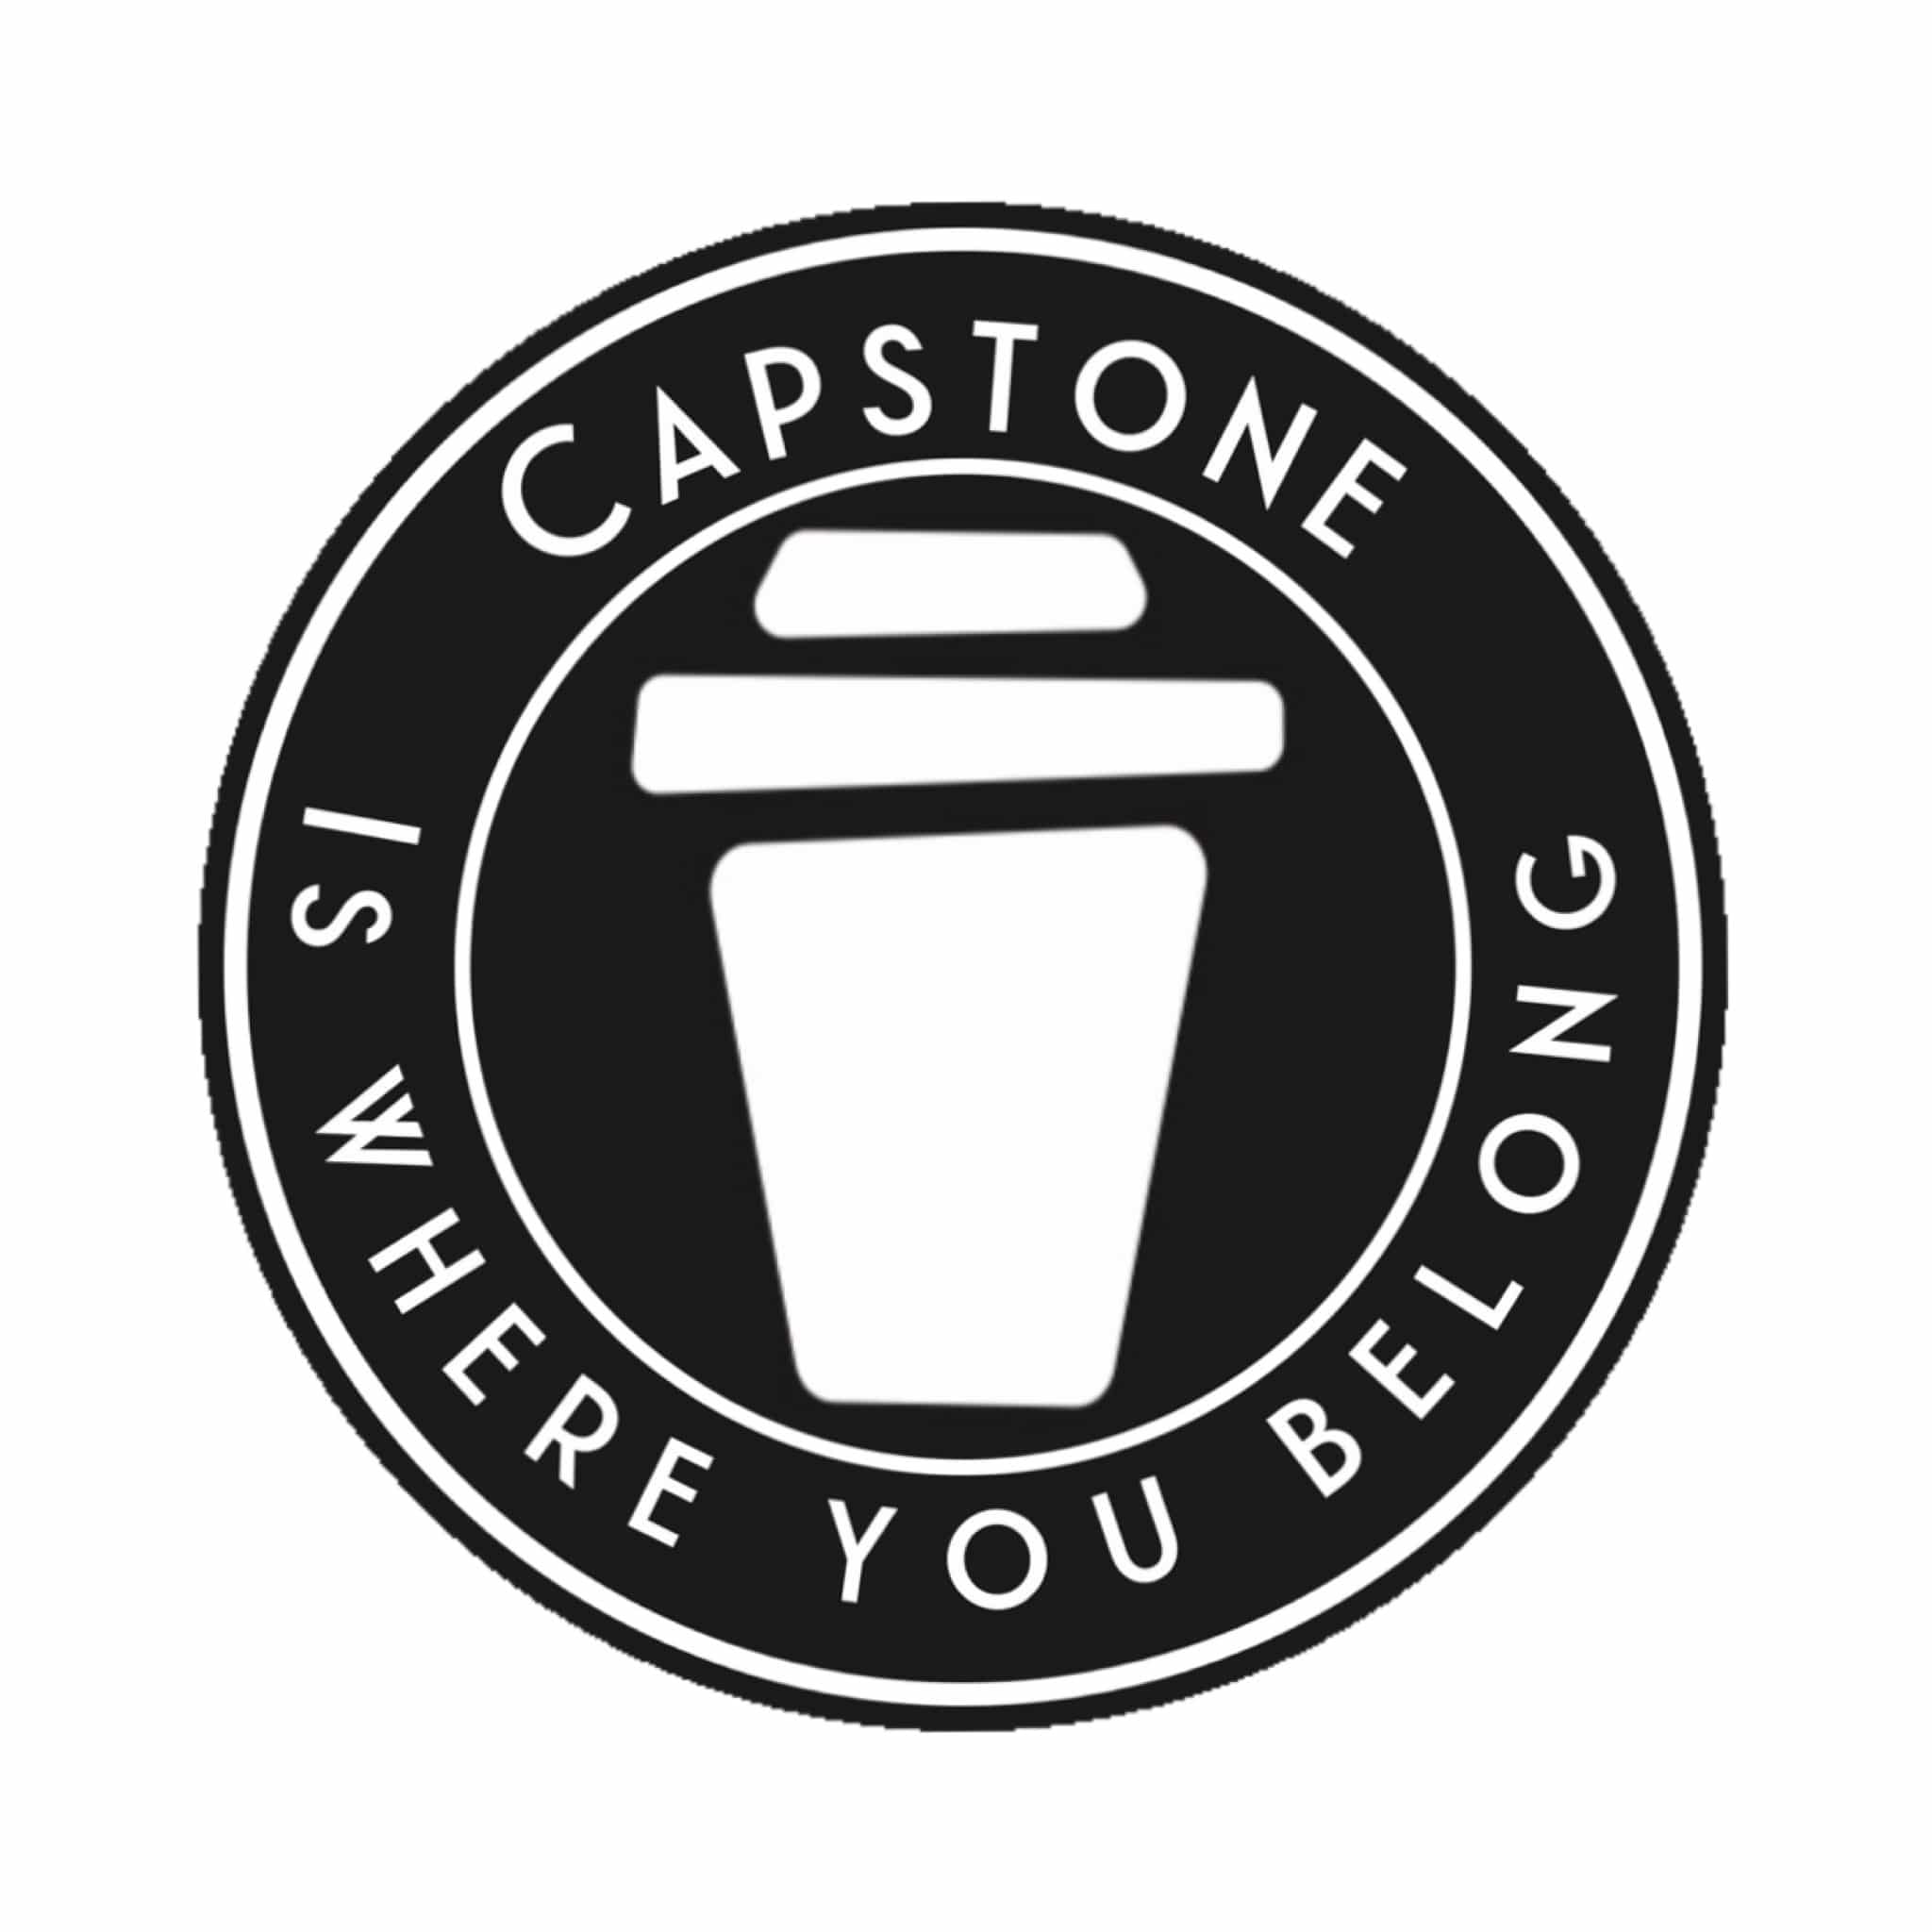 Capstone Is Where You Belong